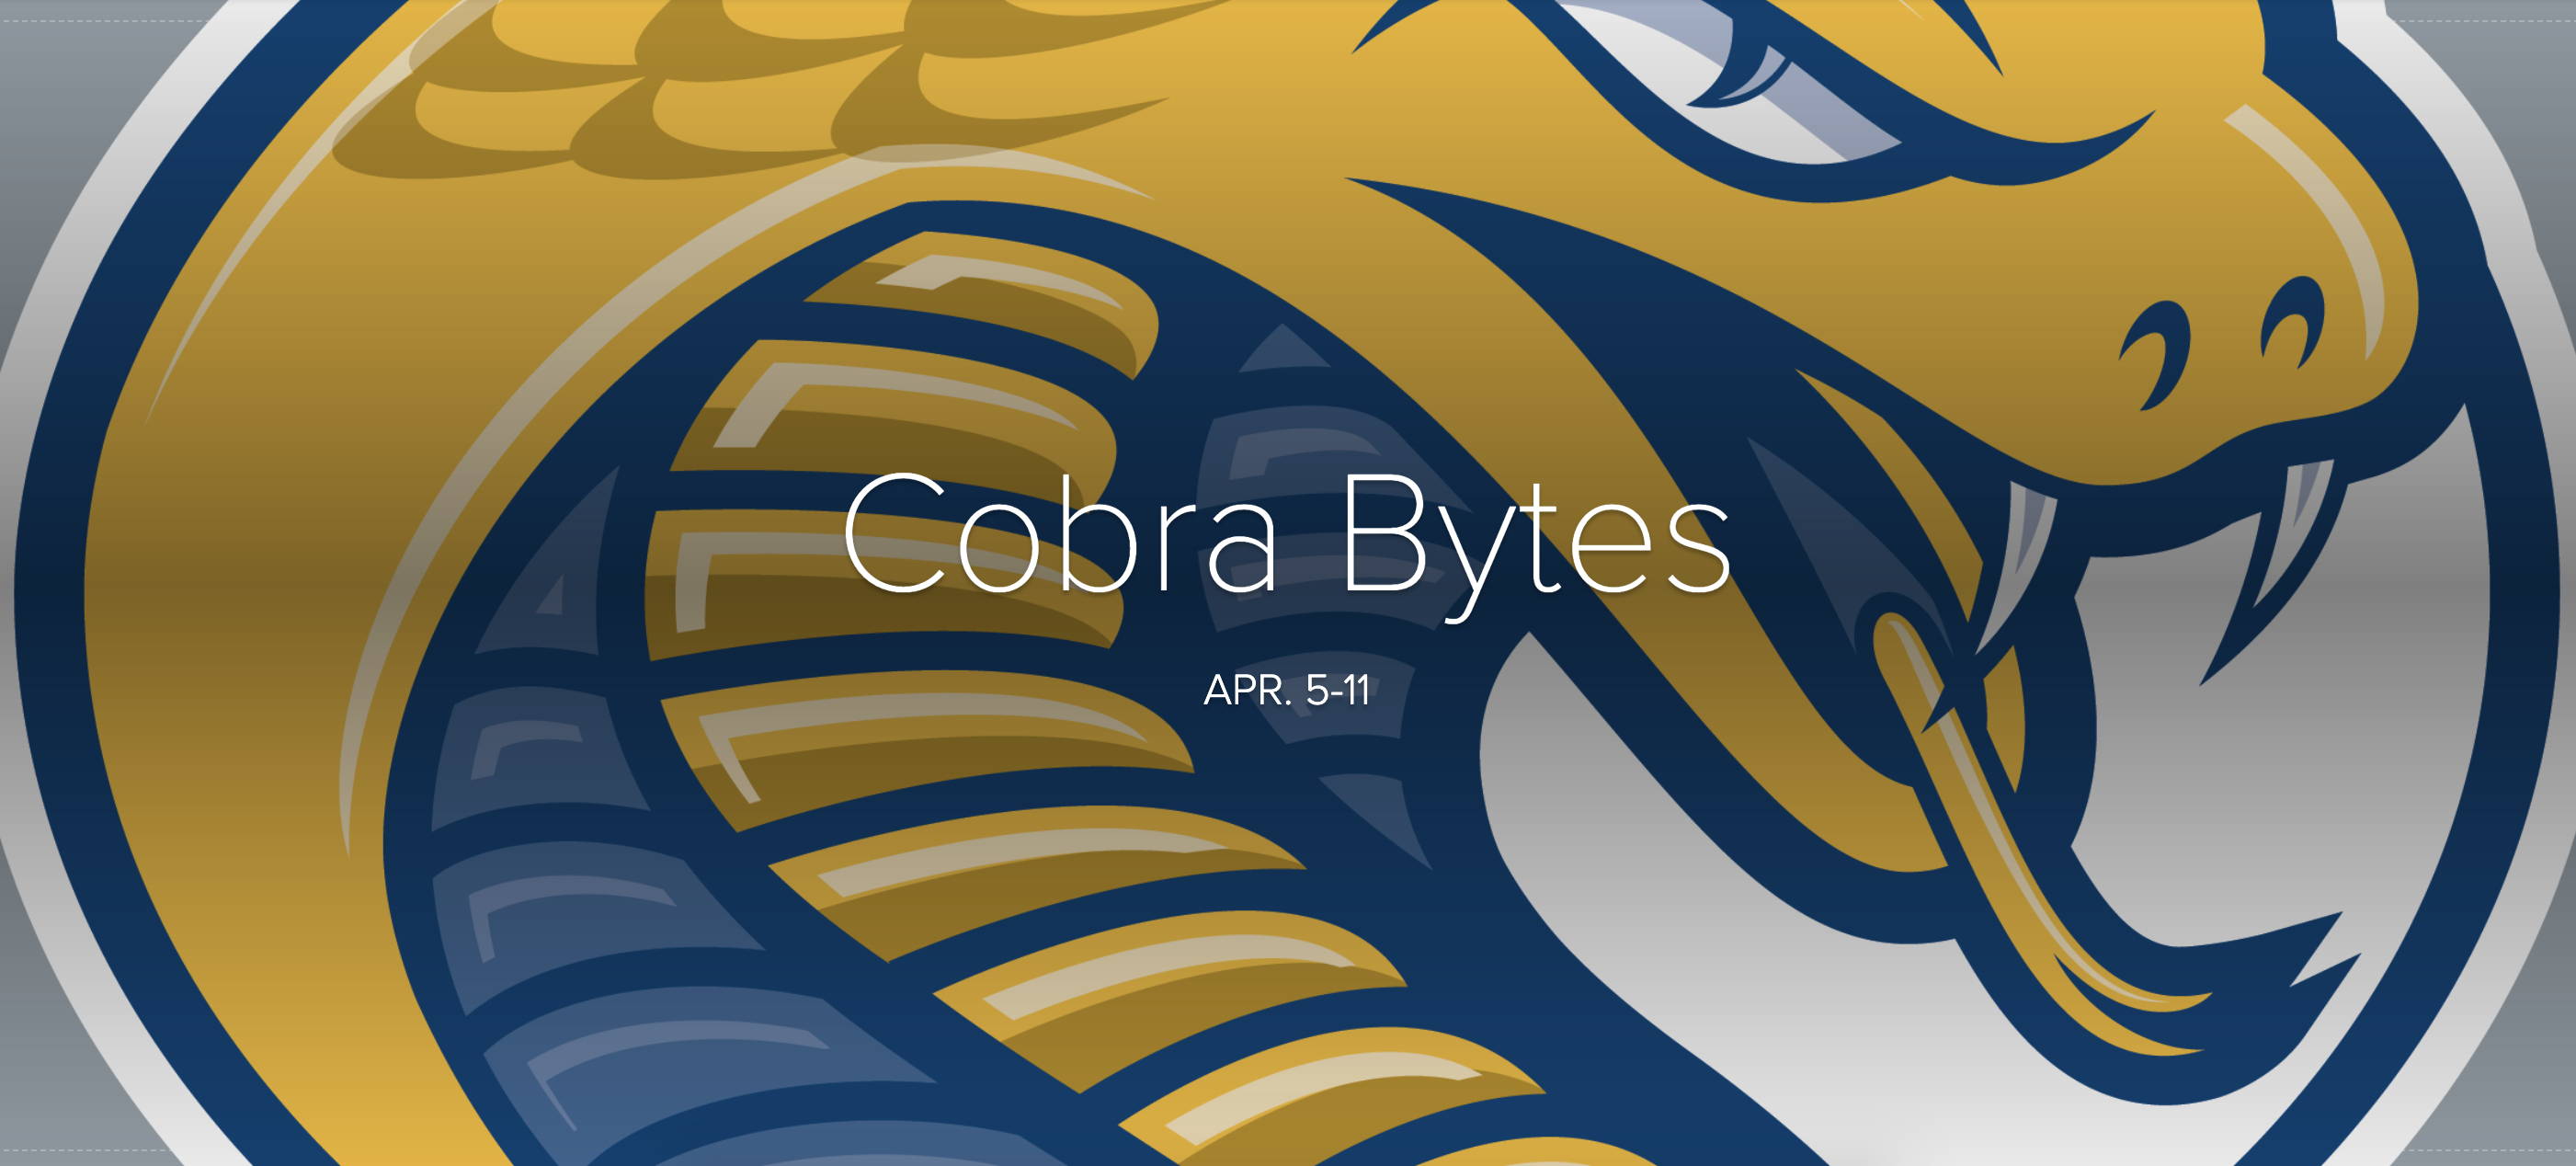 Cobra Bytes Apr. 5-11